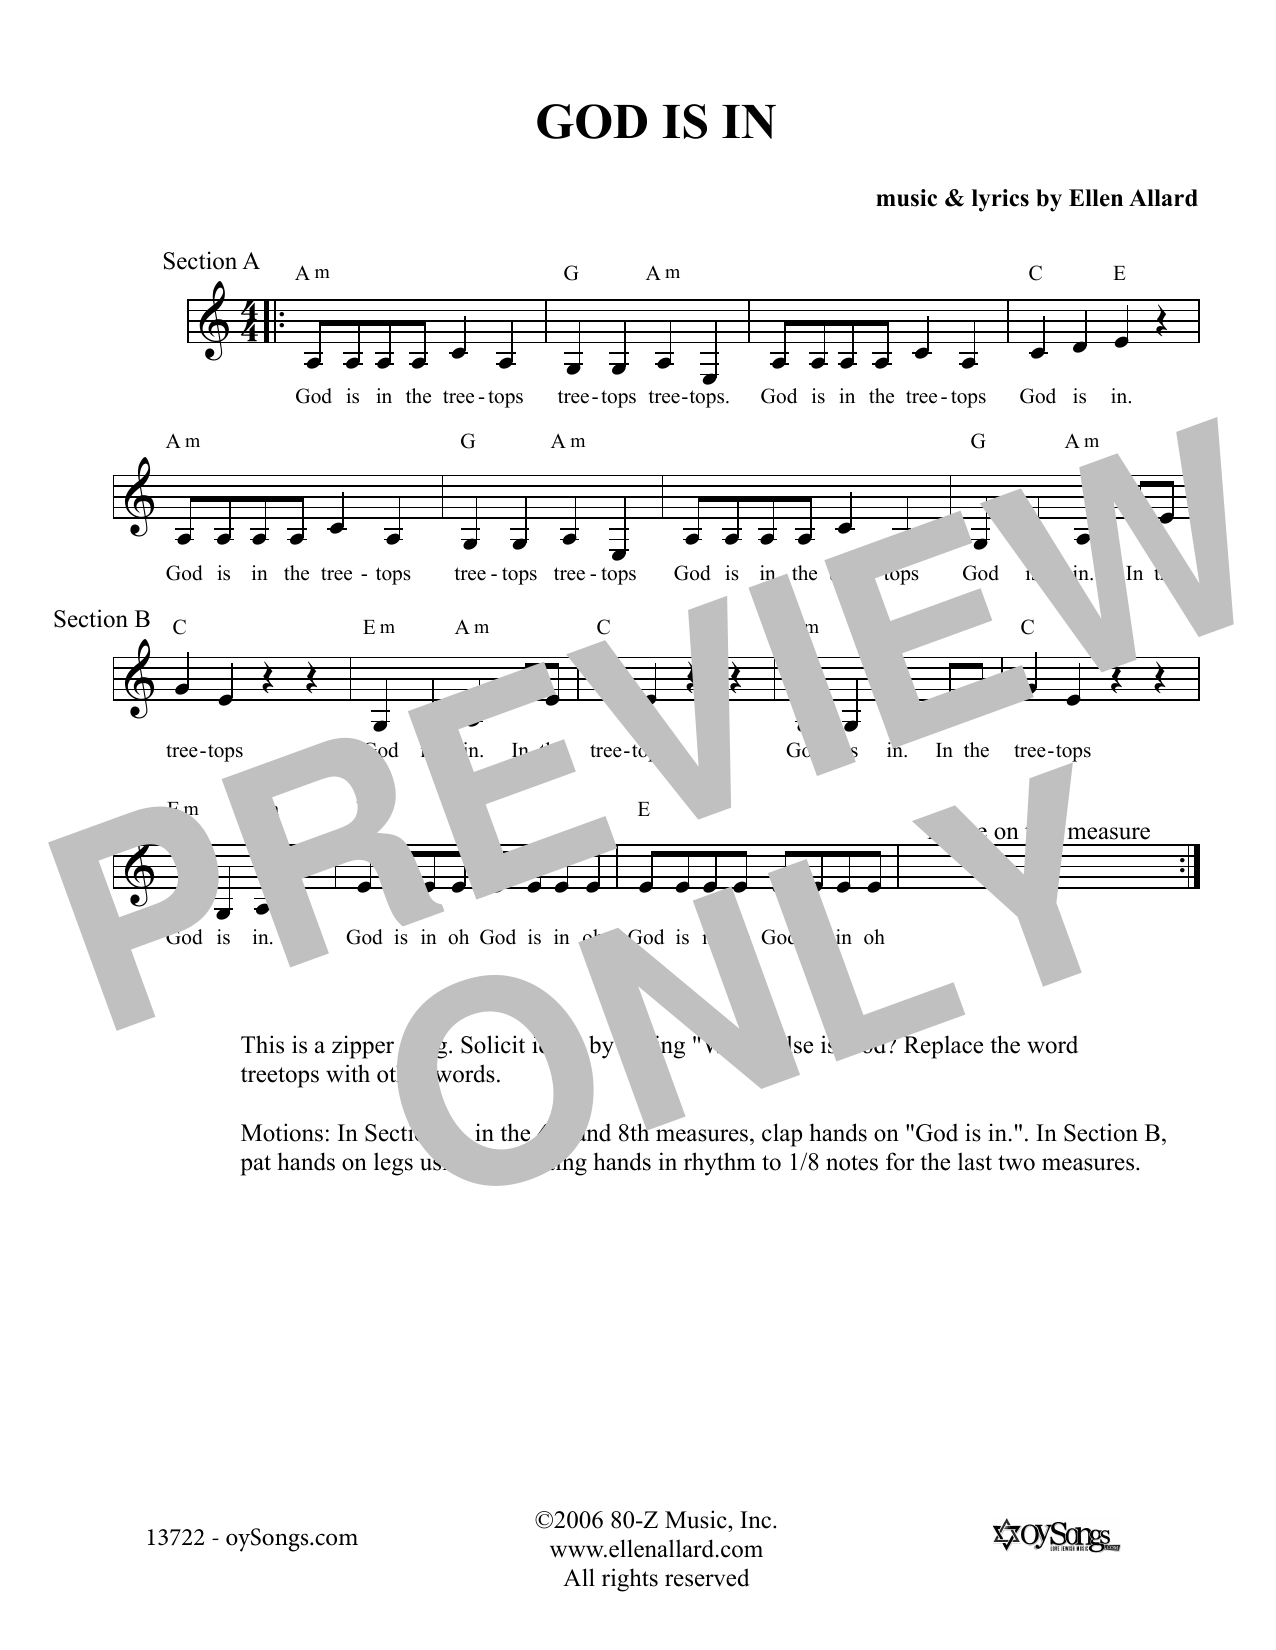 Ellen Allard God Is In Sheet Music Notes & Chords for Melody Line, Lyrics & Chords - Download or Print PDF